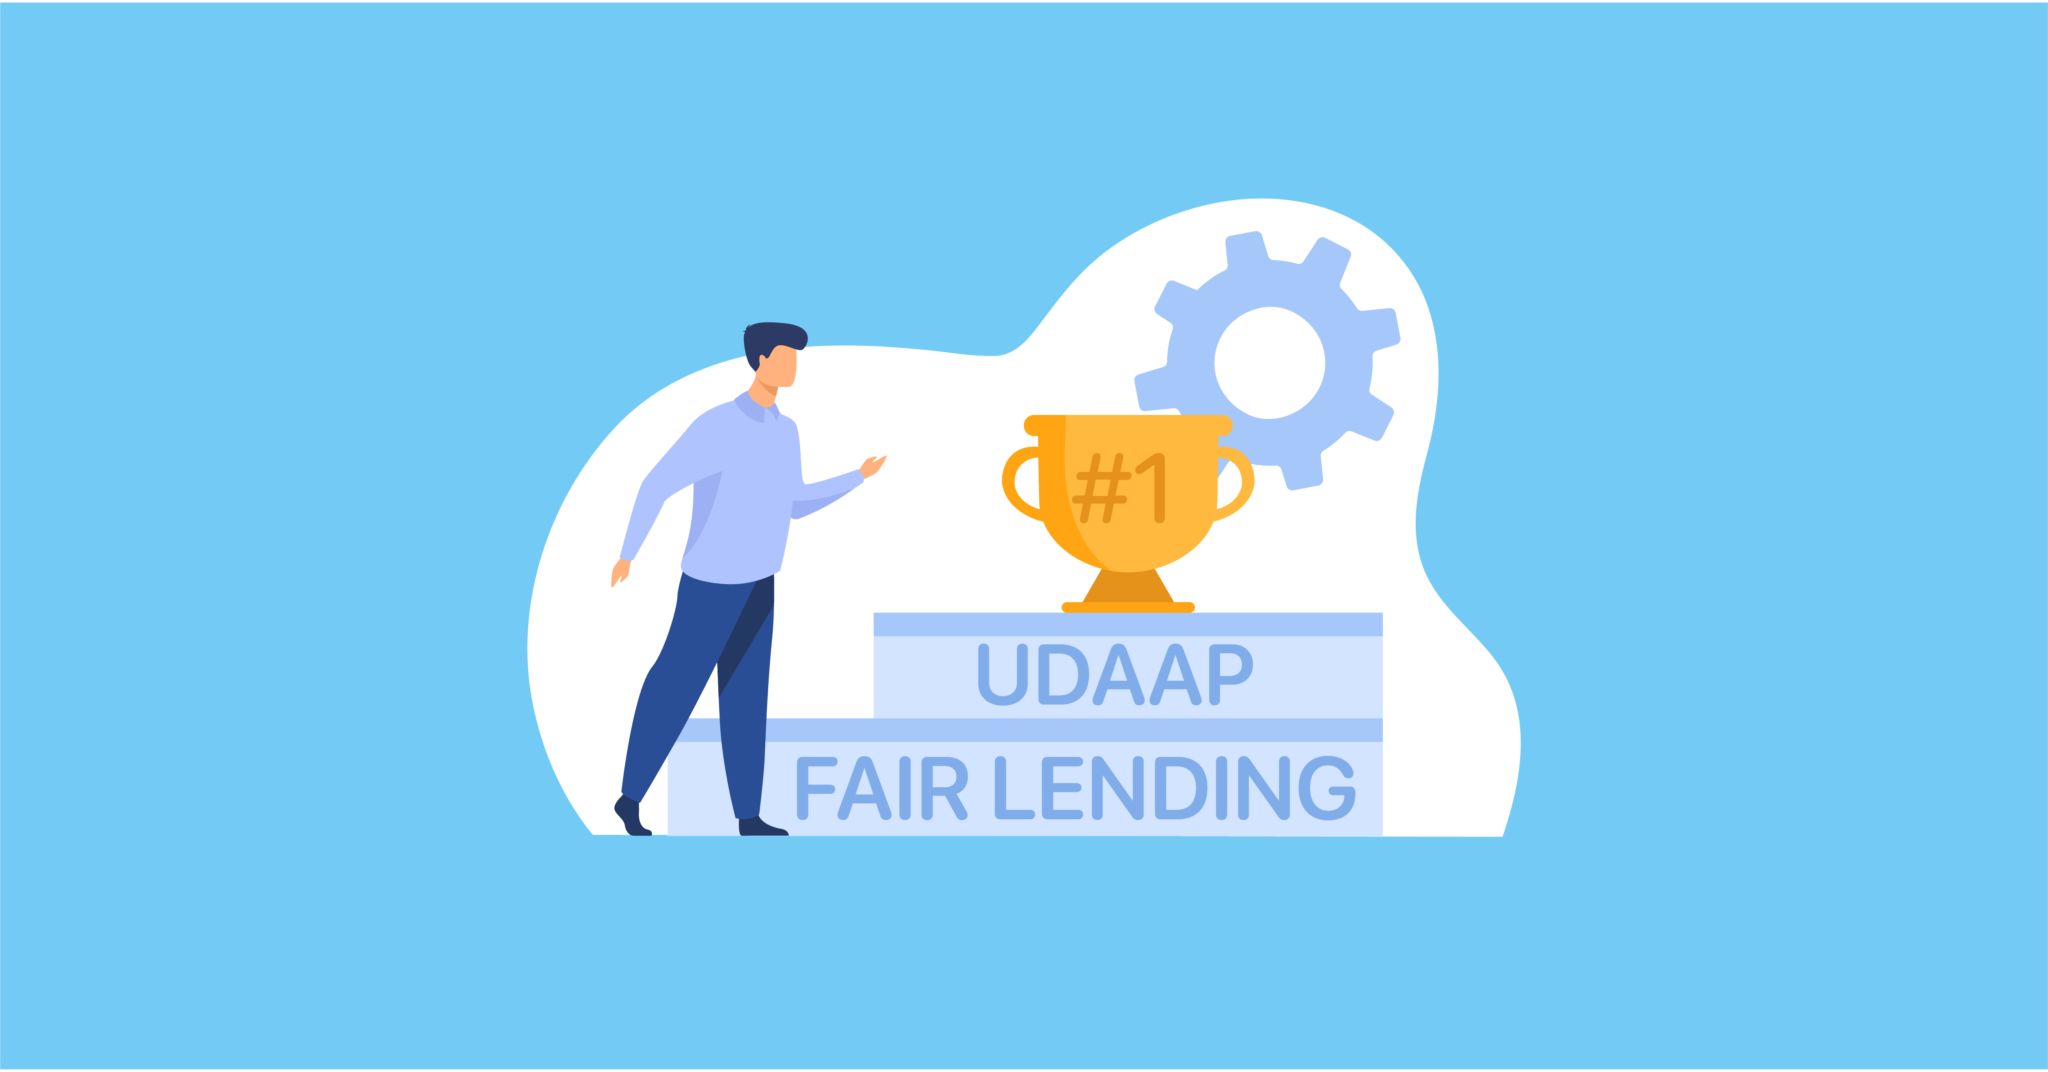 UDAAP and Fair Lending Compliance: A Simple 2-Step Approach